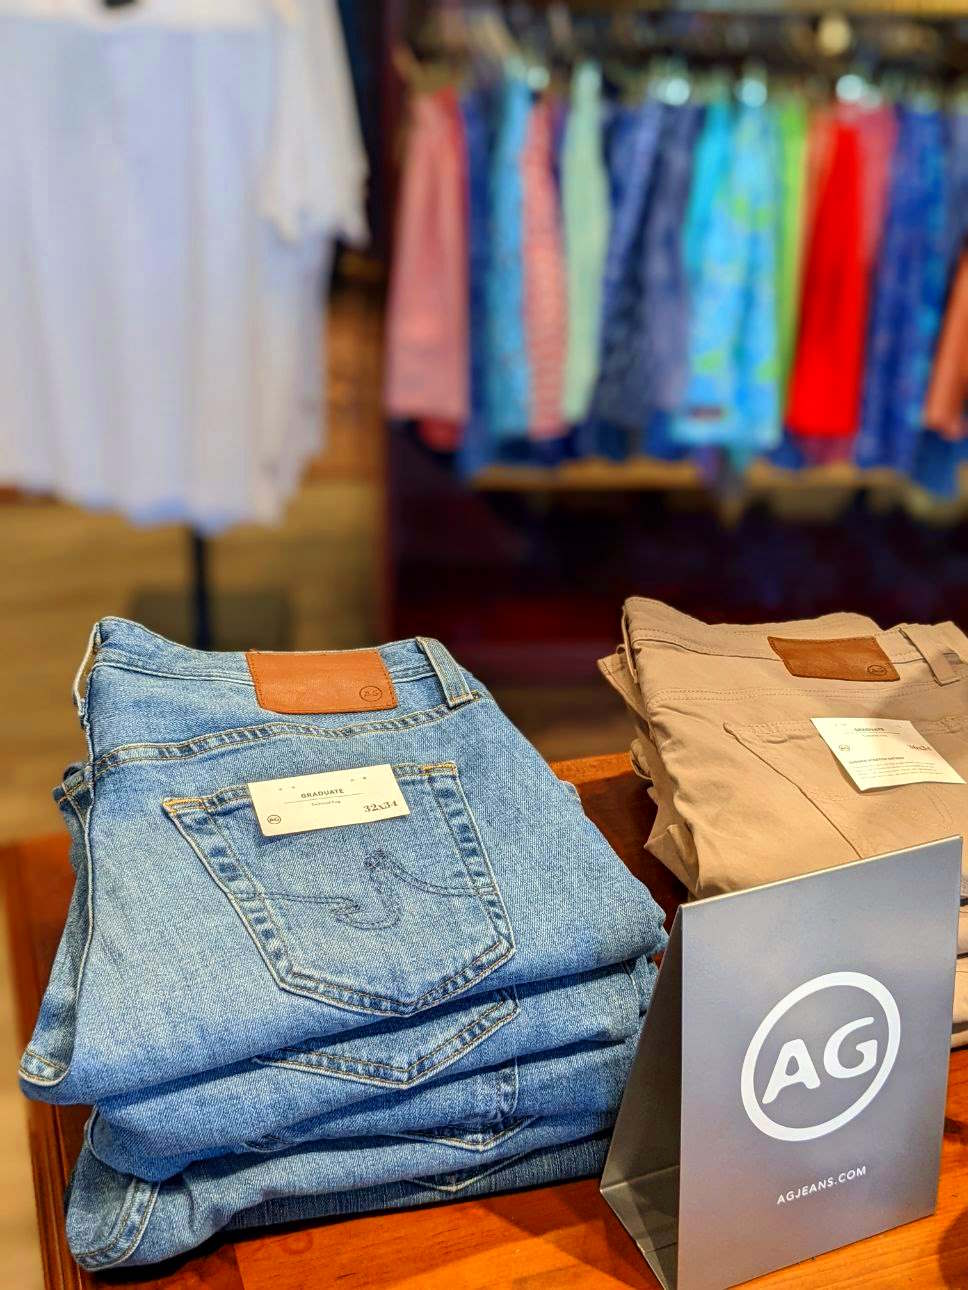 AG Jeans